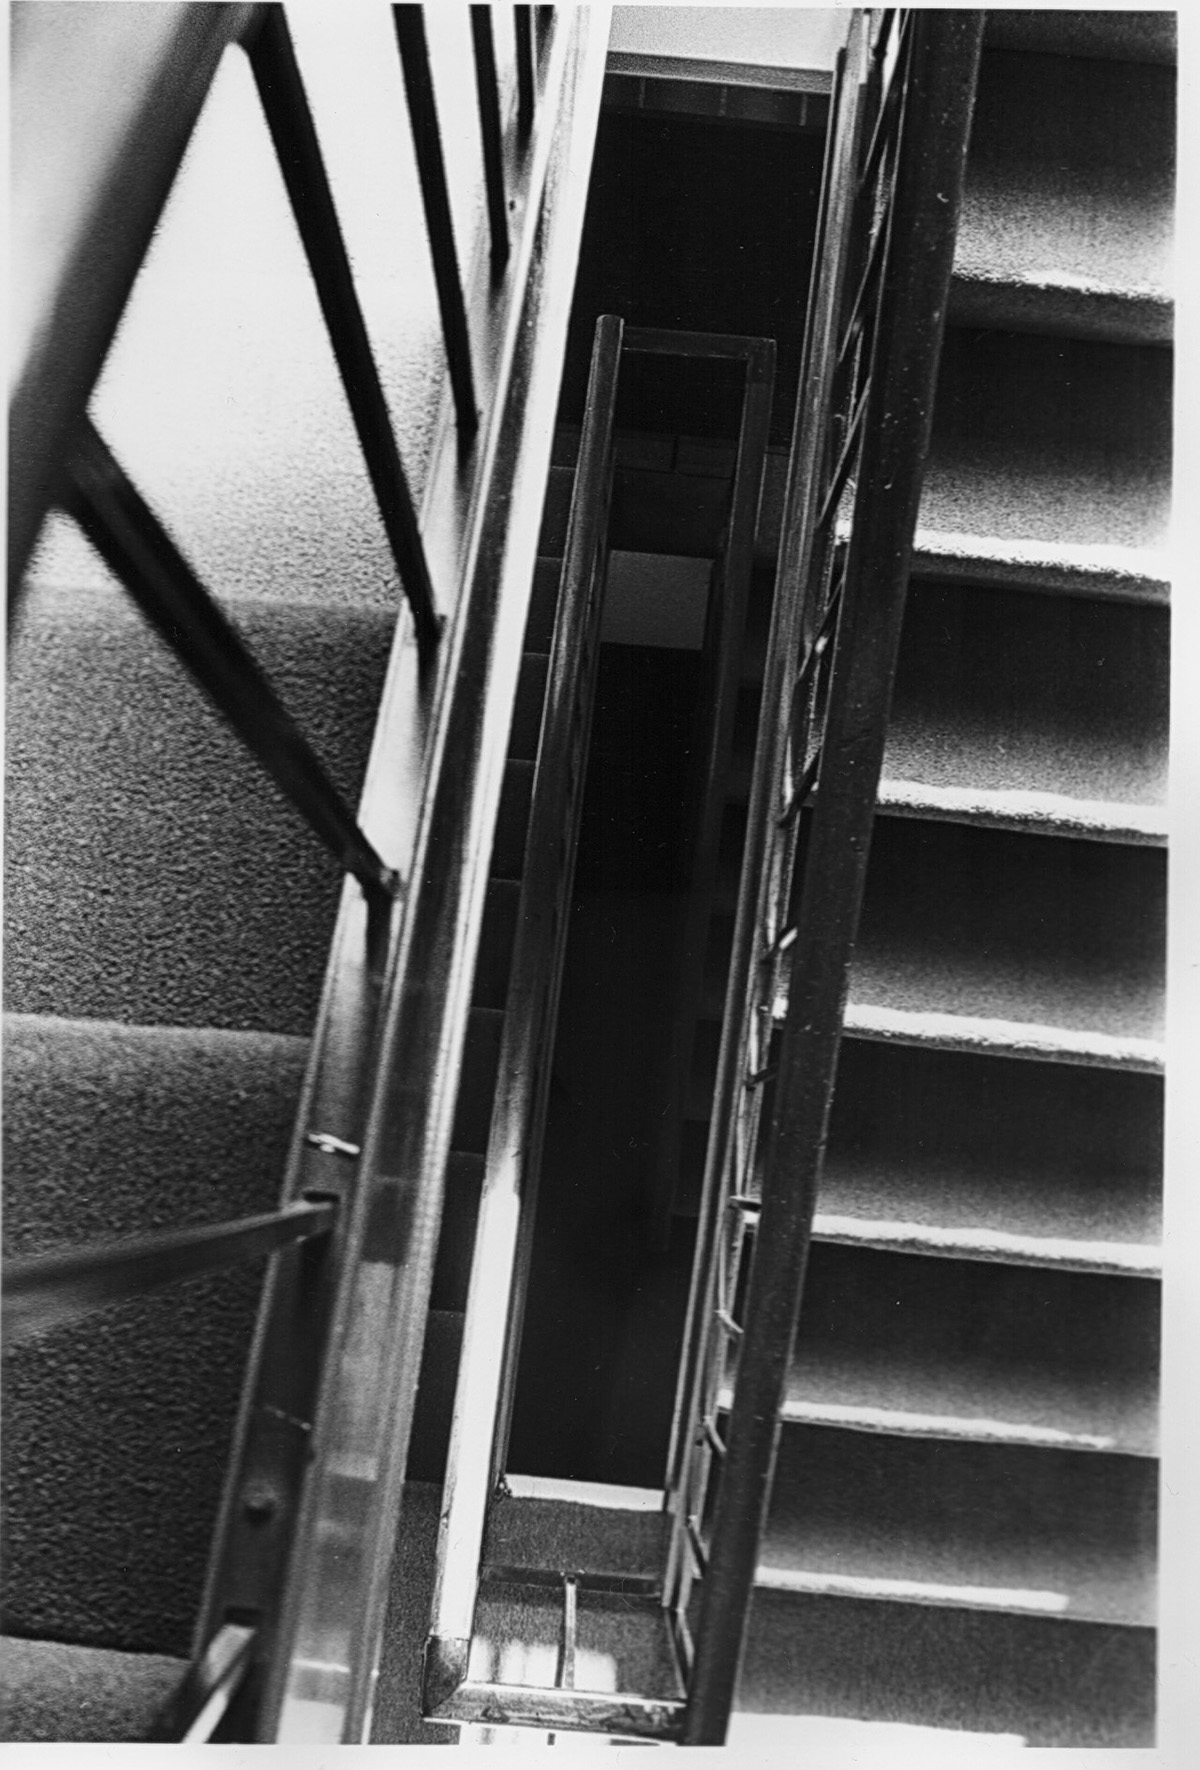 35mm 4x5 black and white film photography darkroom